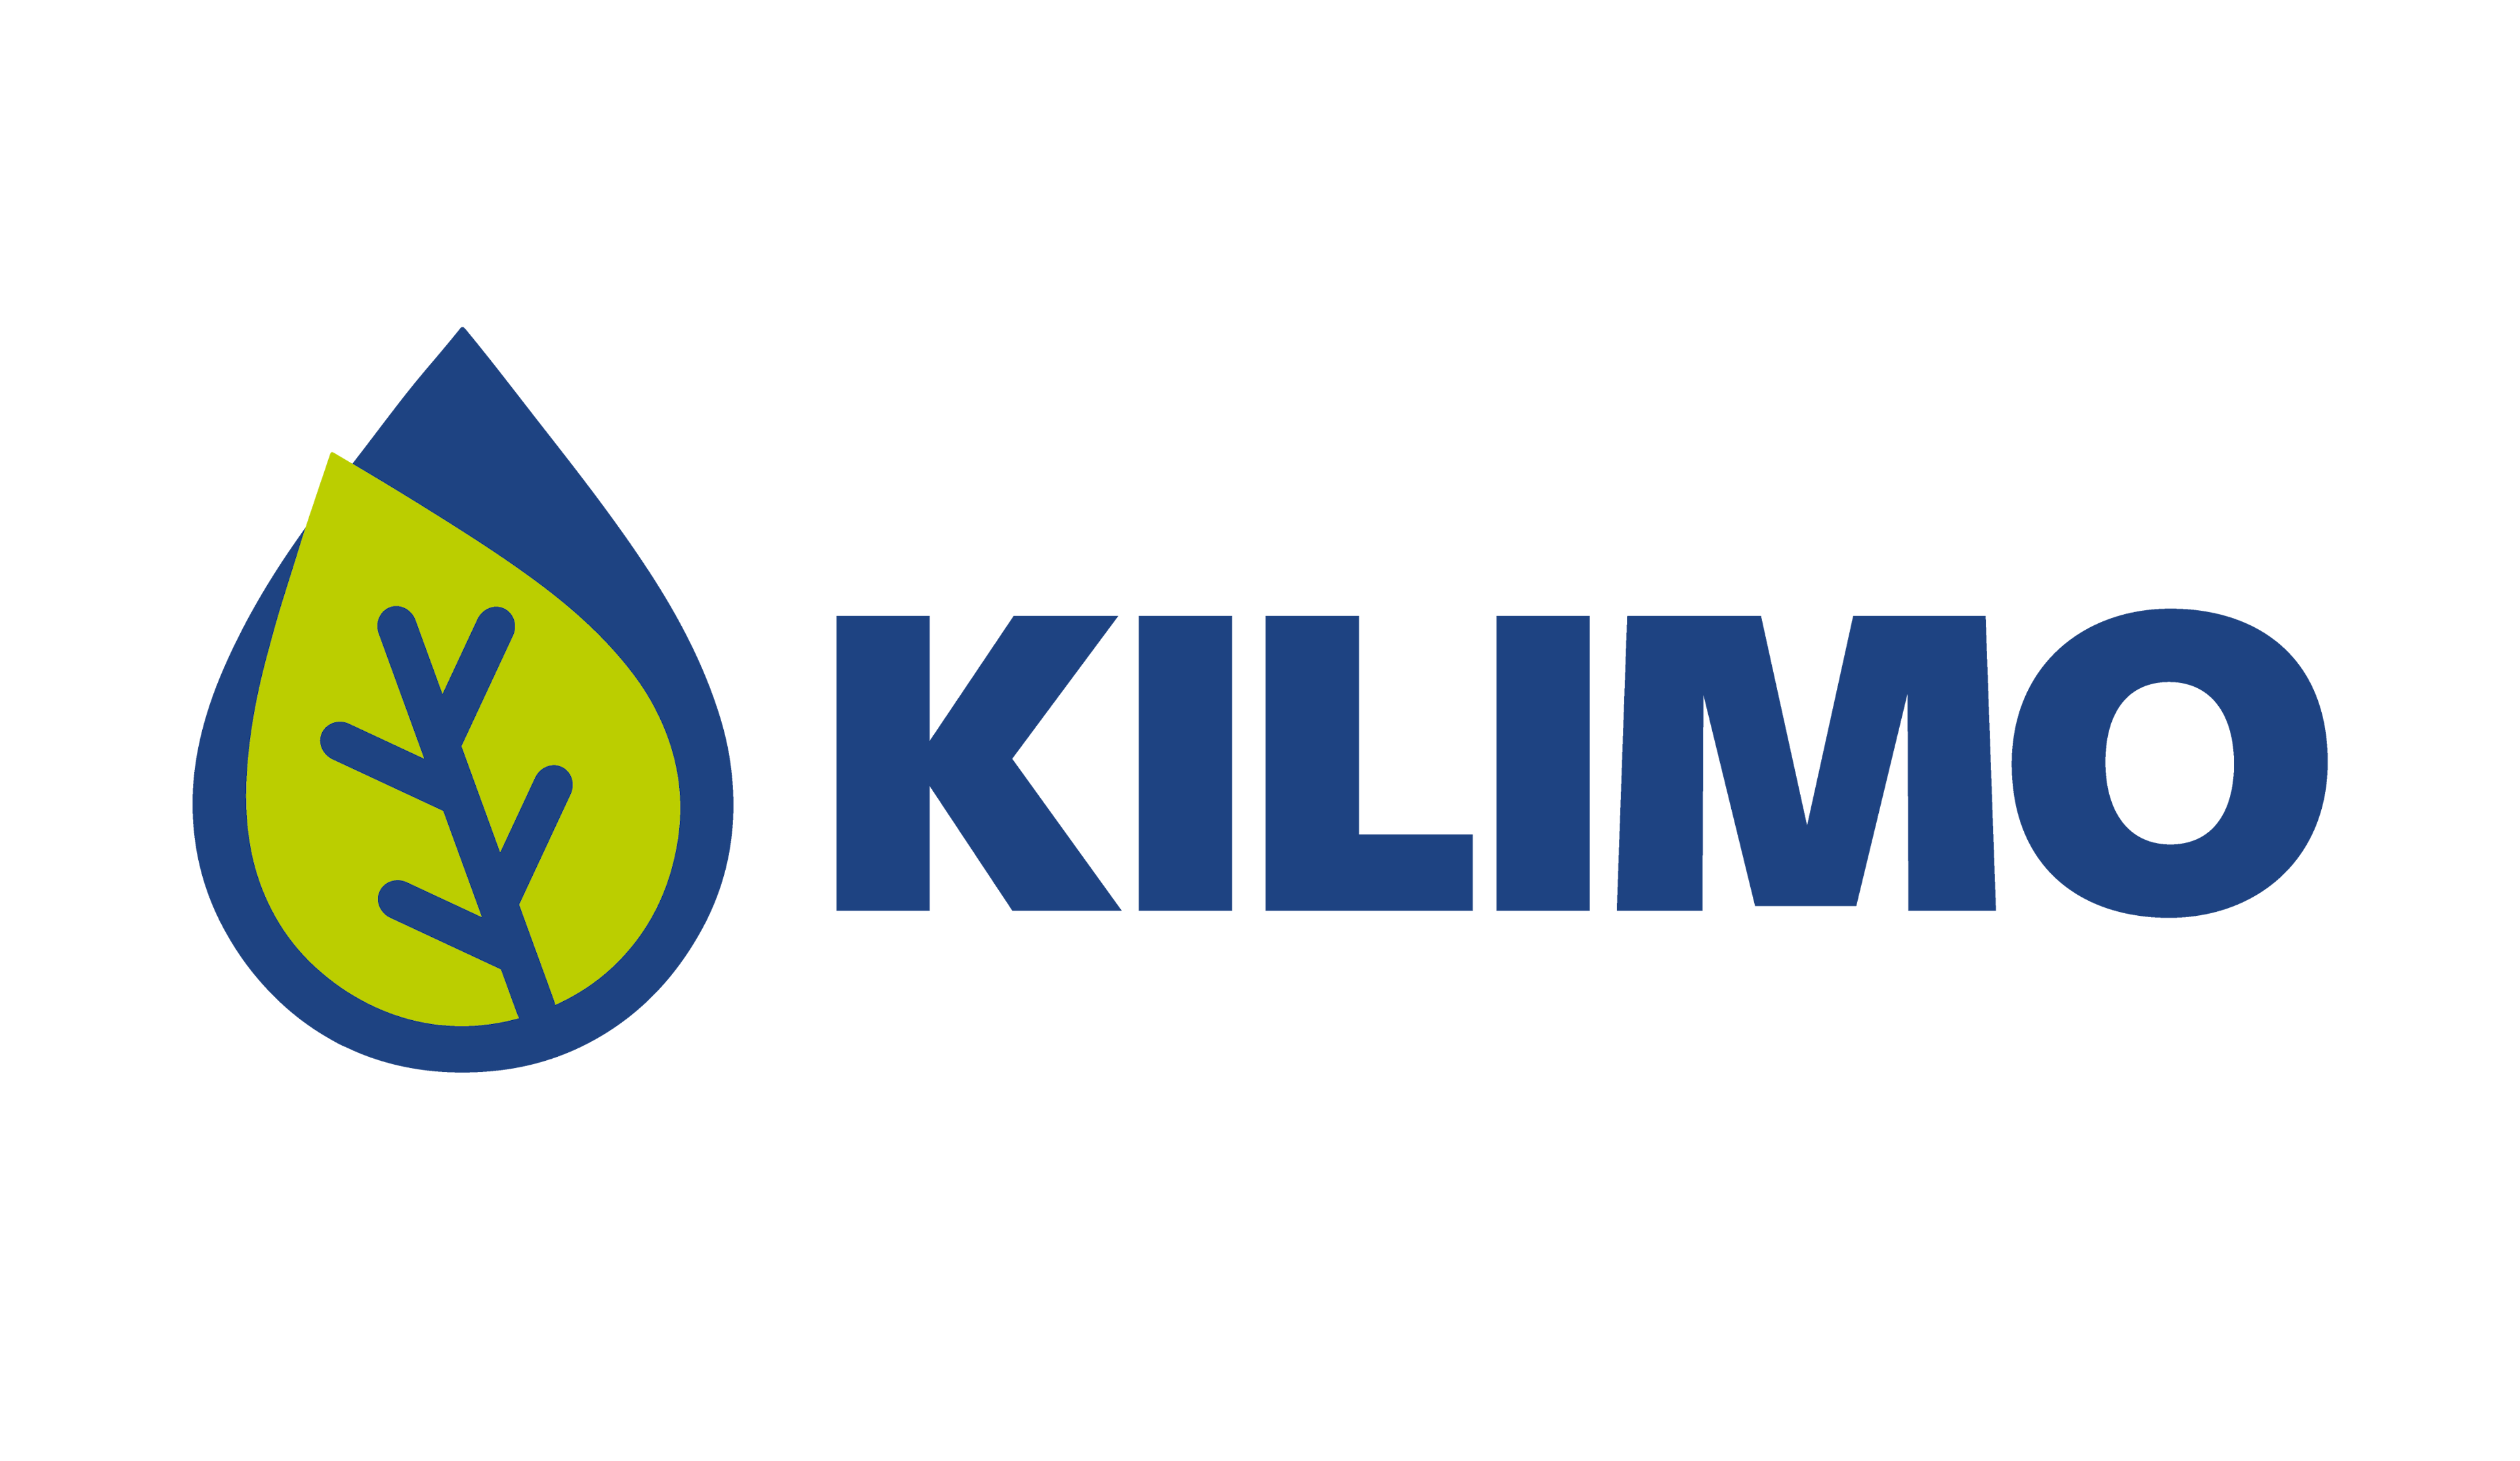 Kilimo logo